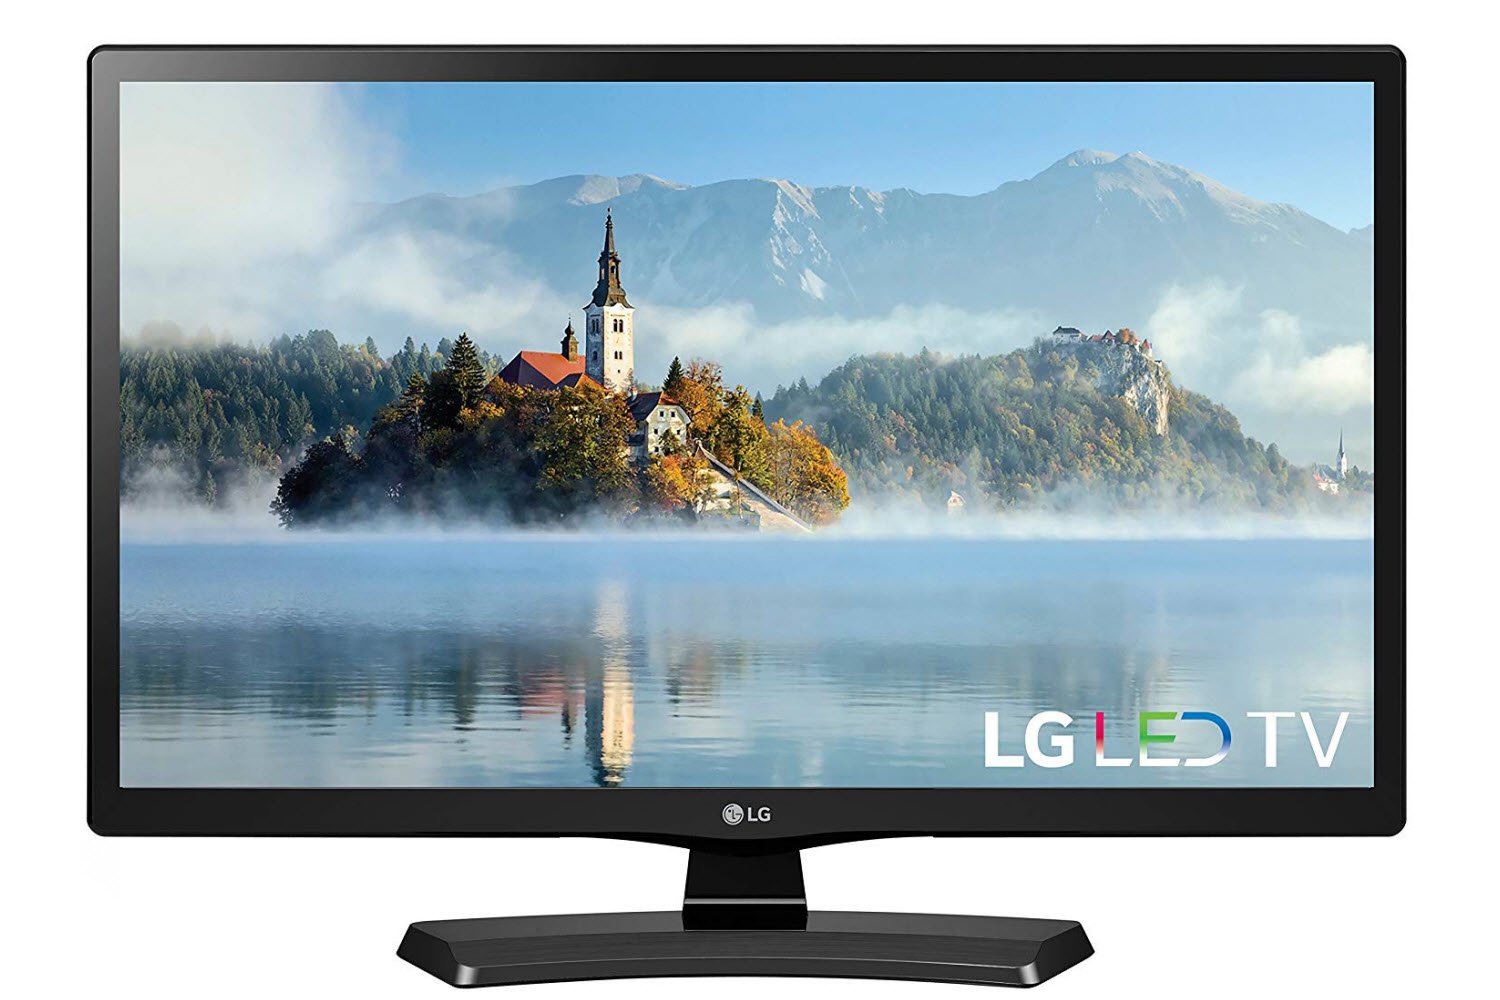 LG Electronics 24LJ4540 24-Inch 720p LED TV (2017 Model)